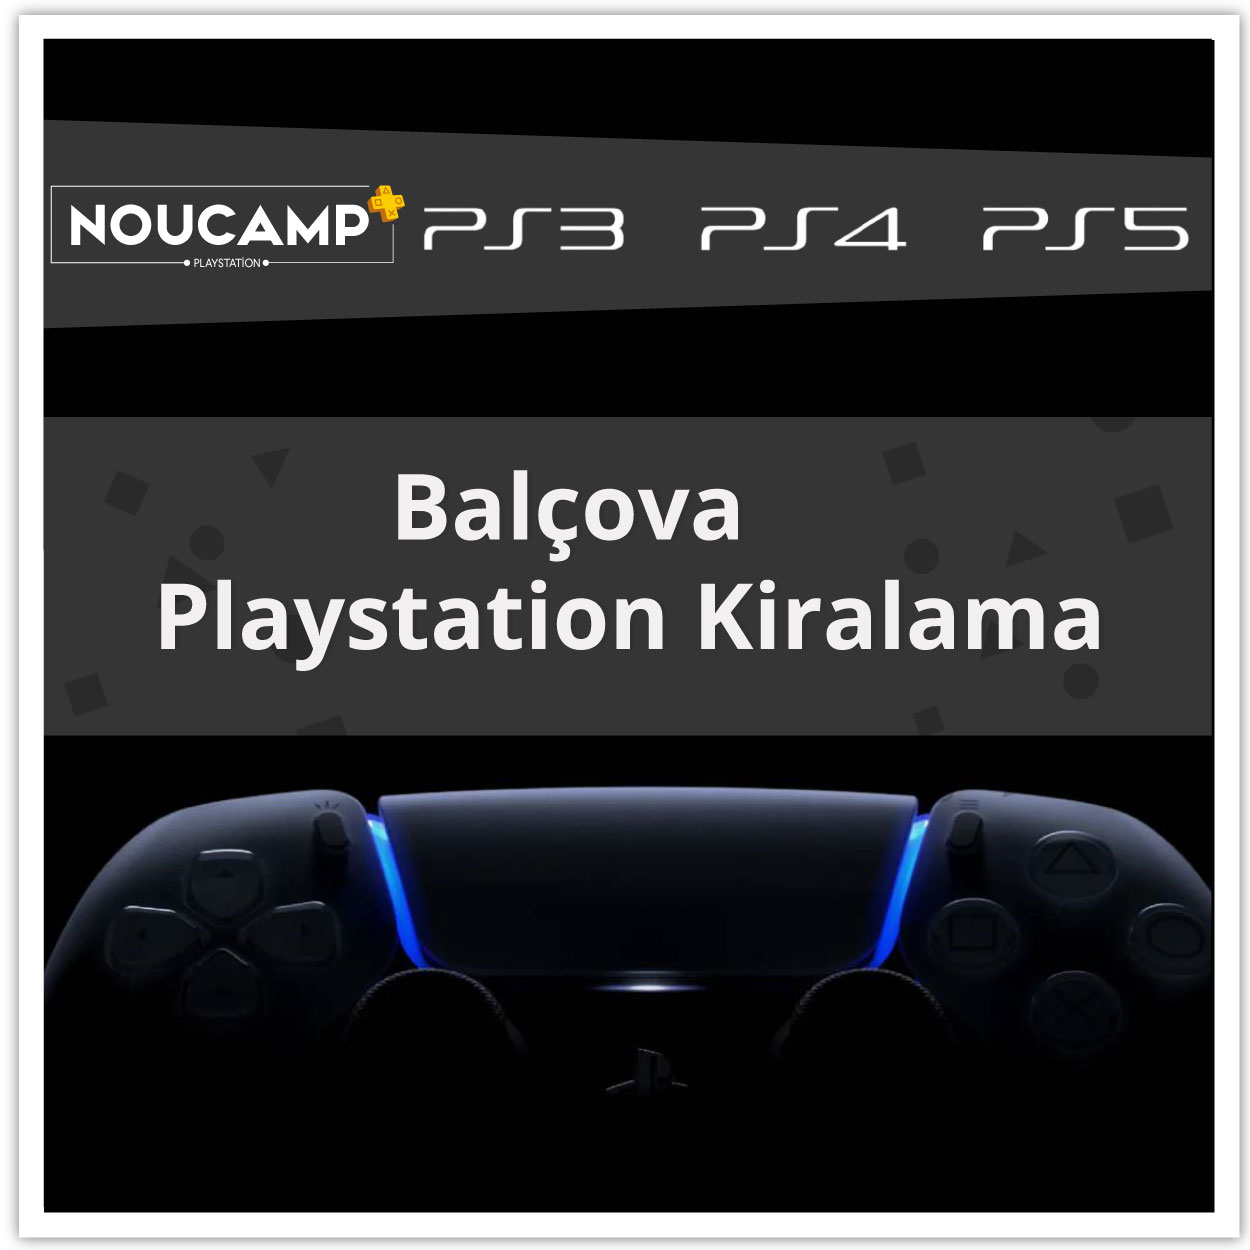 balcova-playstation-kiralama